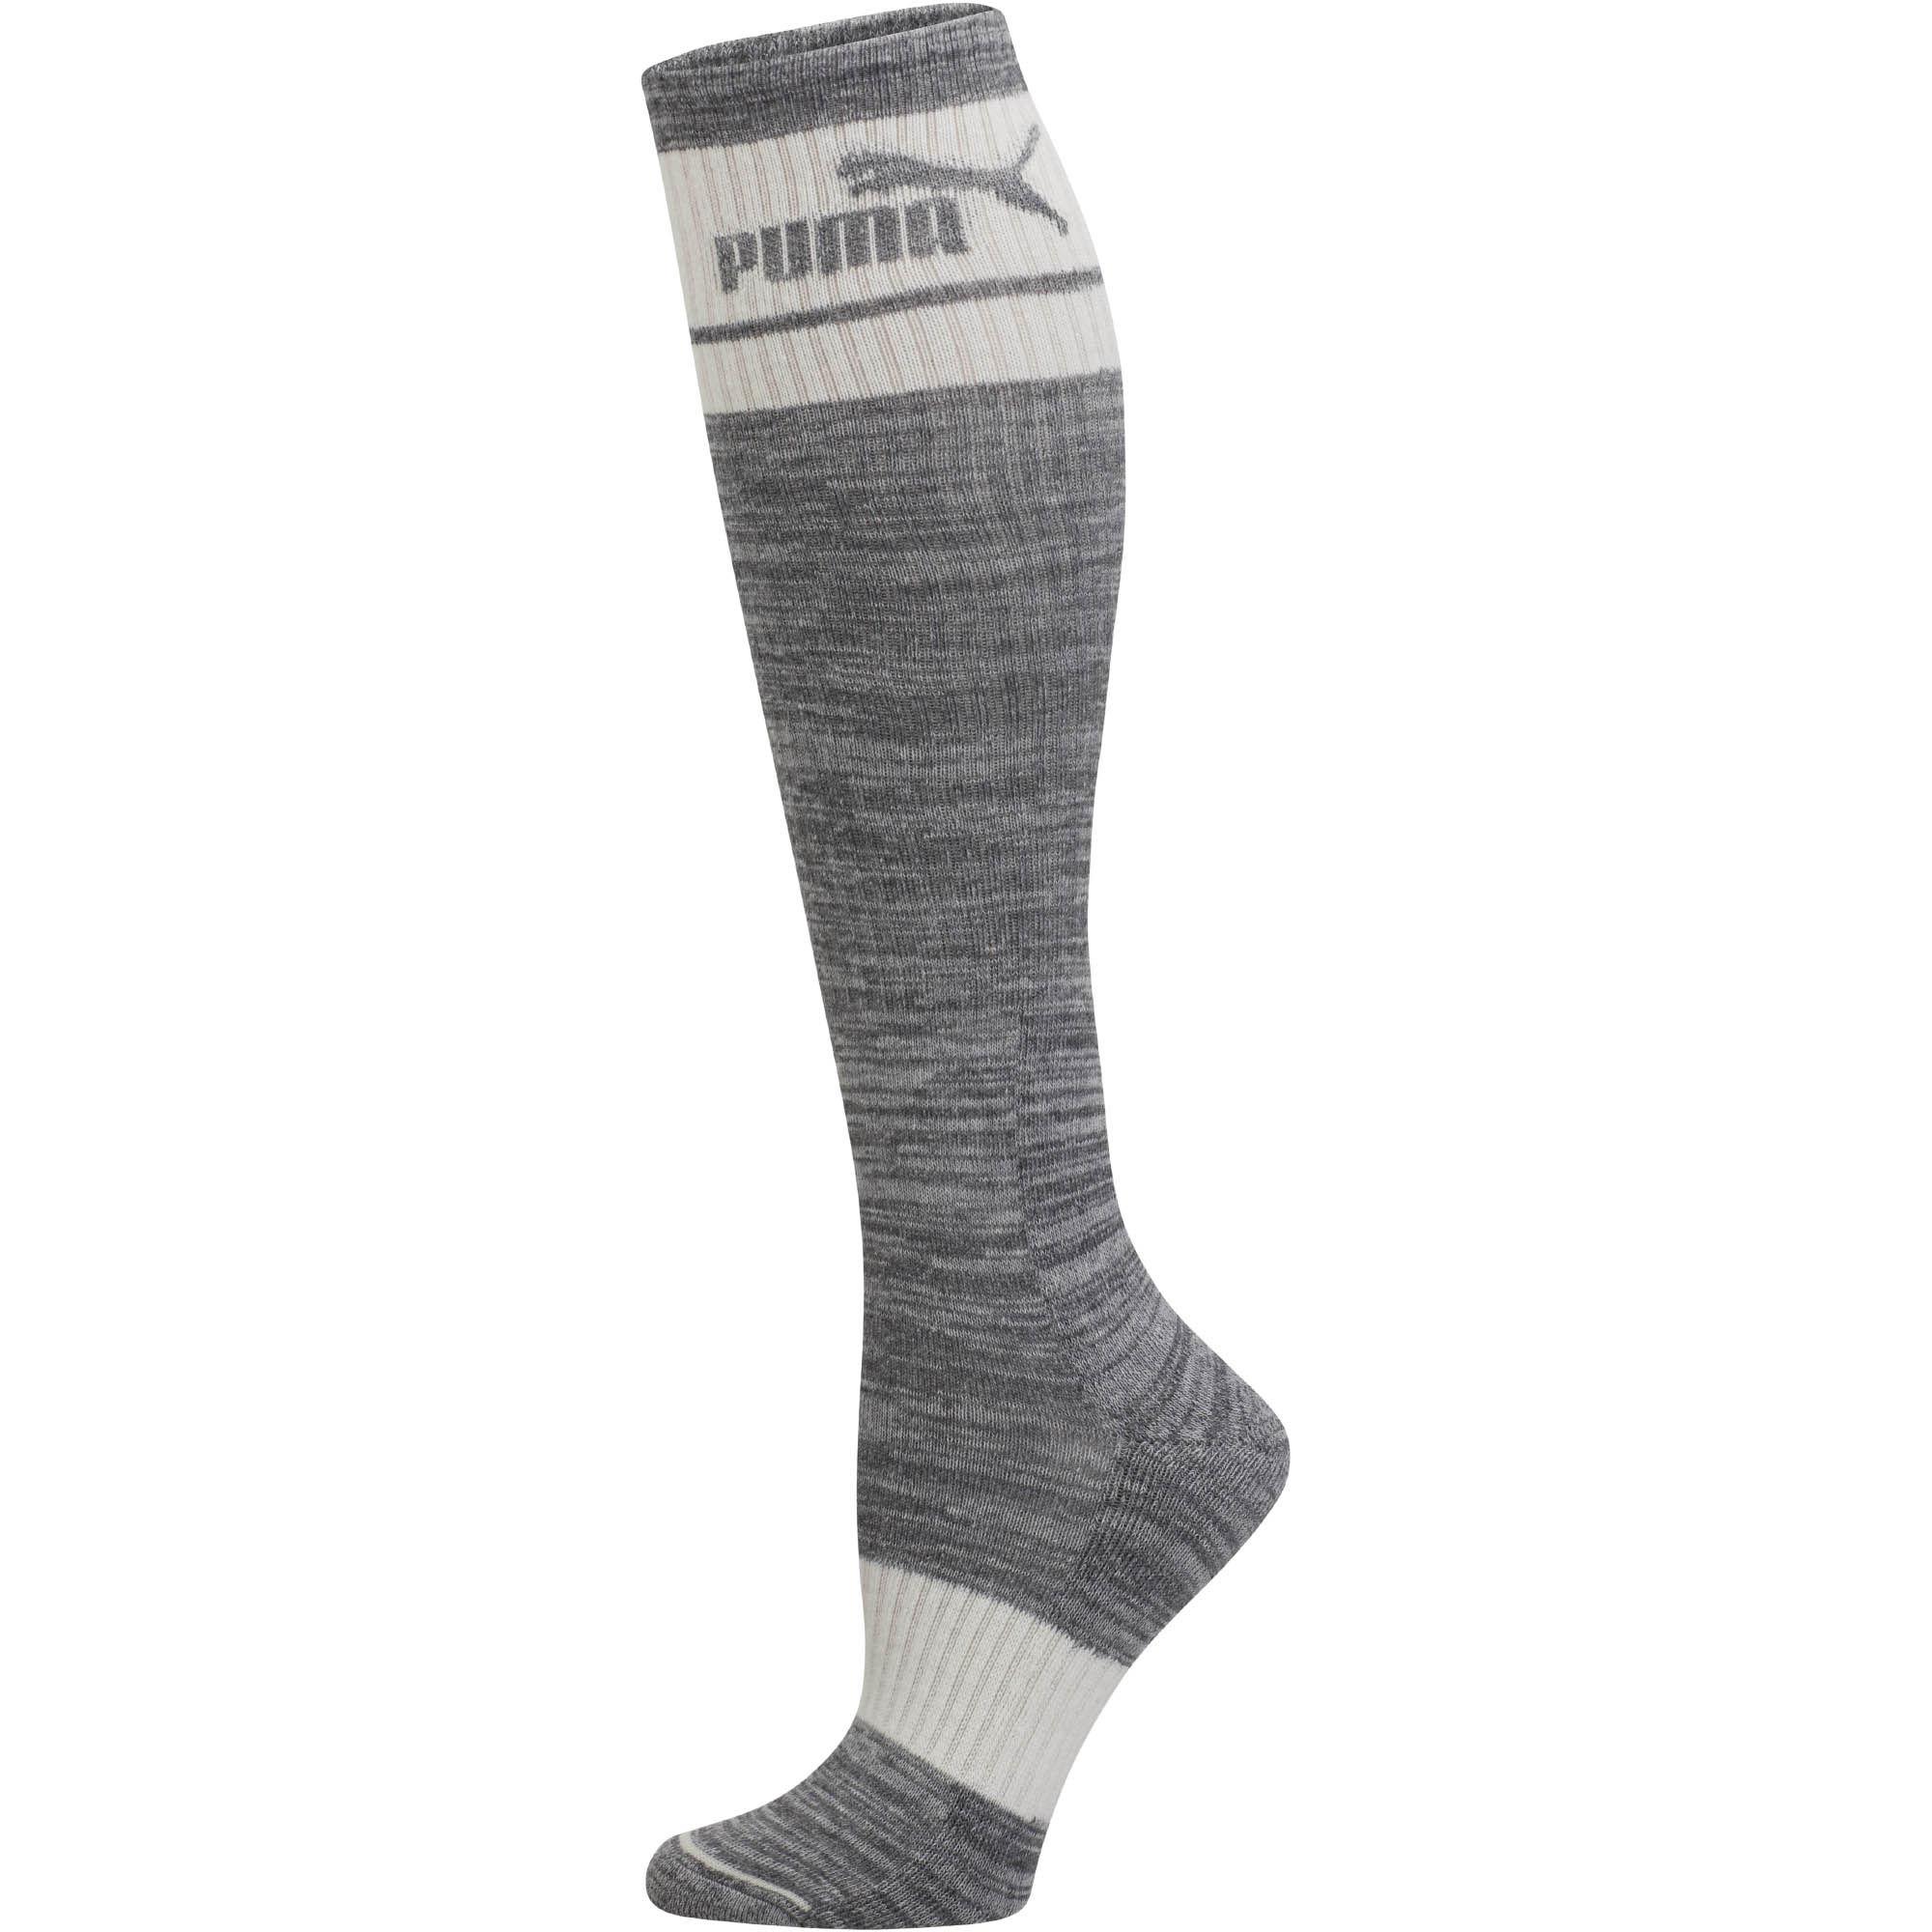 puma tube socks